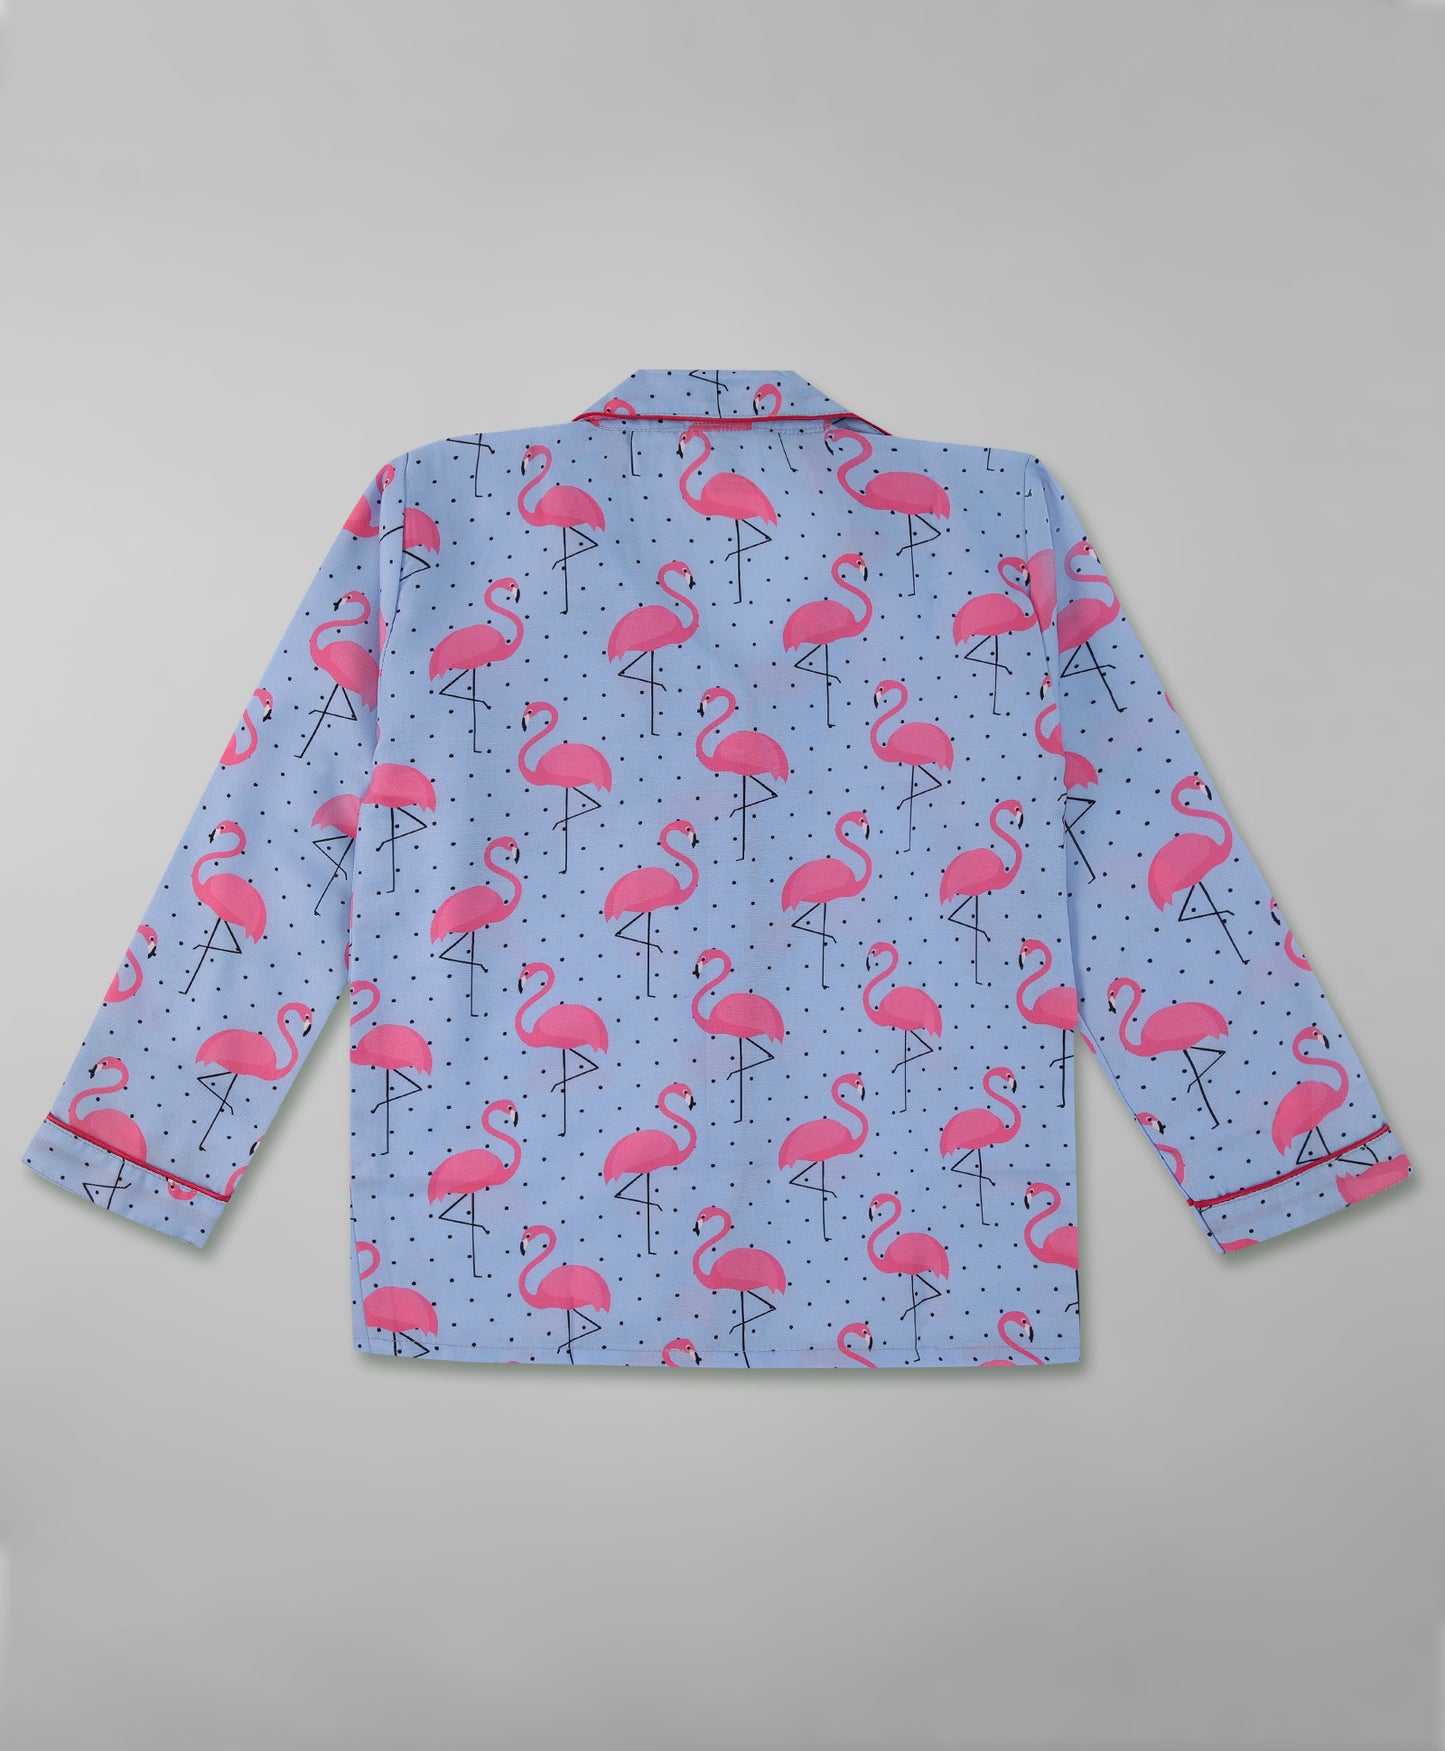 Flamingo and Dots Kids Pj Set - Cotton Rayon Pj Set with Notched Collar